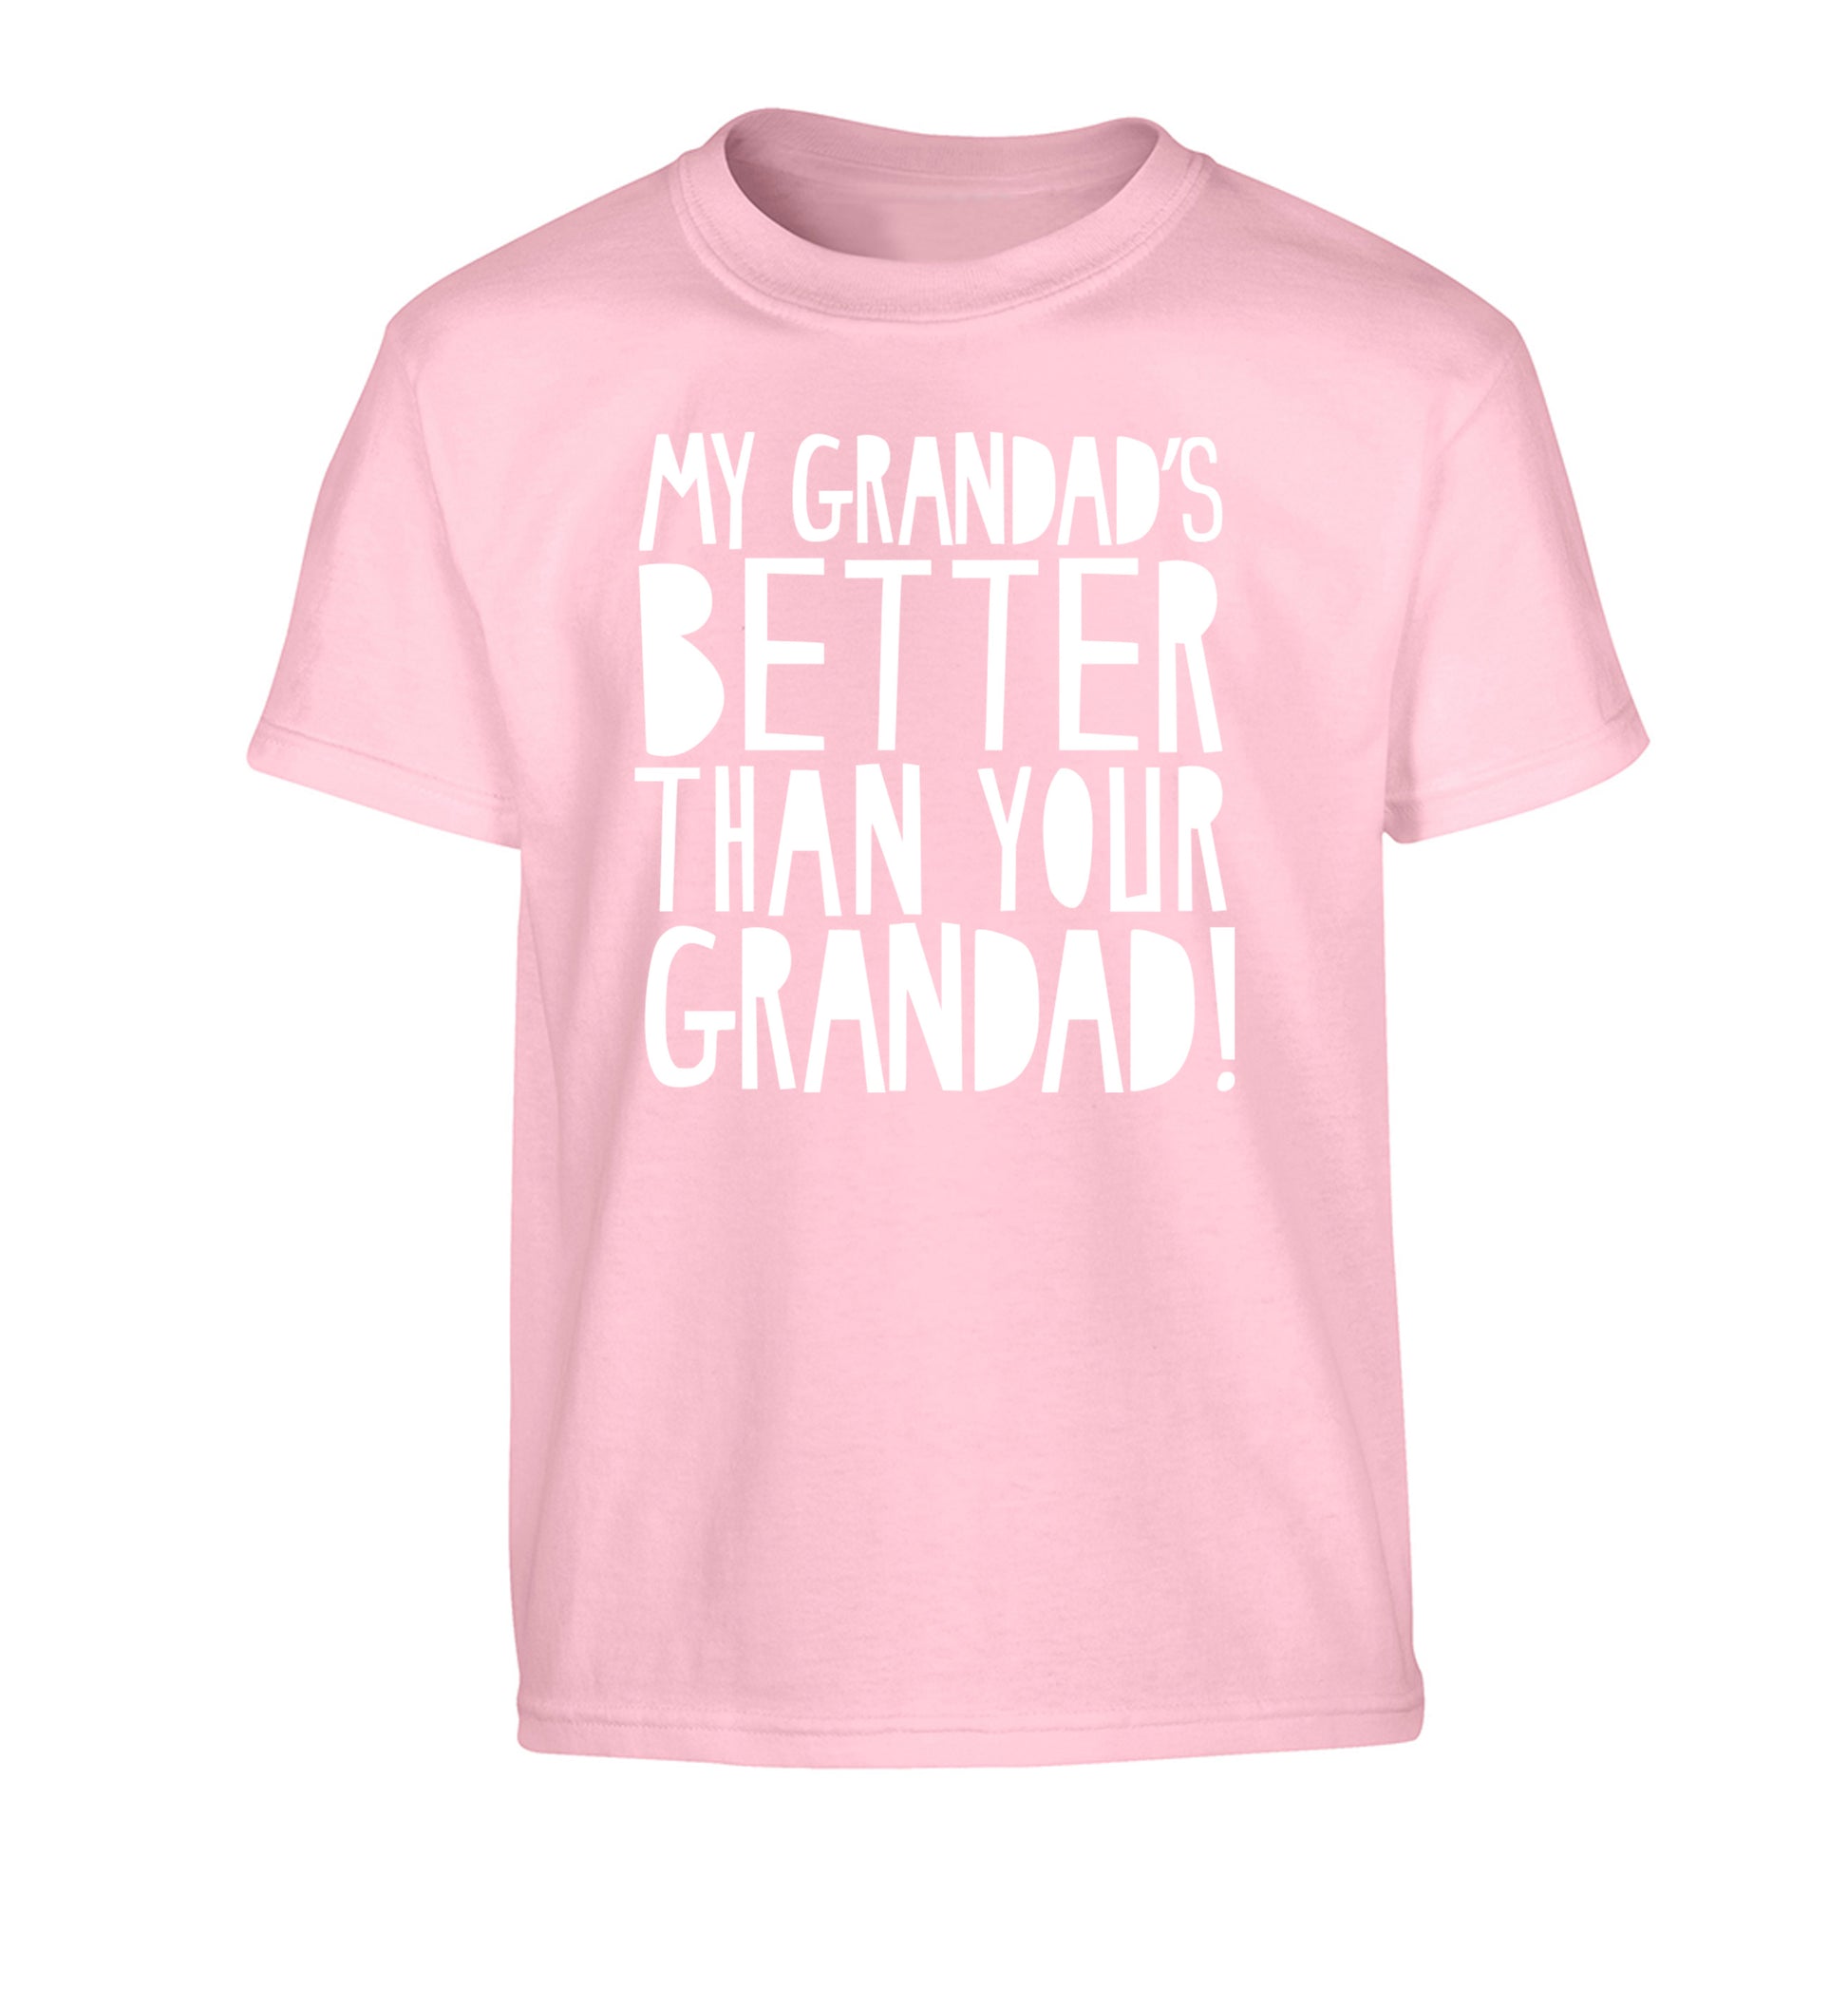 My Grandad's better than your grandad Children's light pink Tshirt 12-13 Years